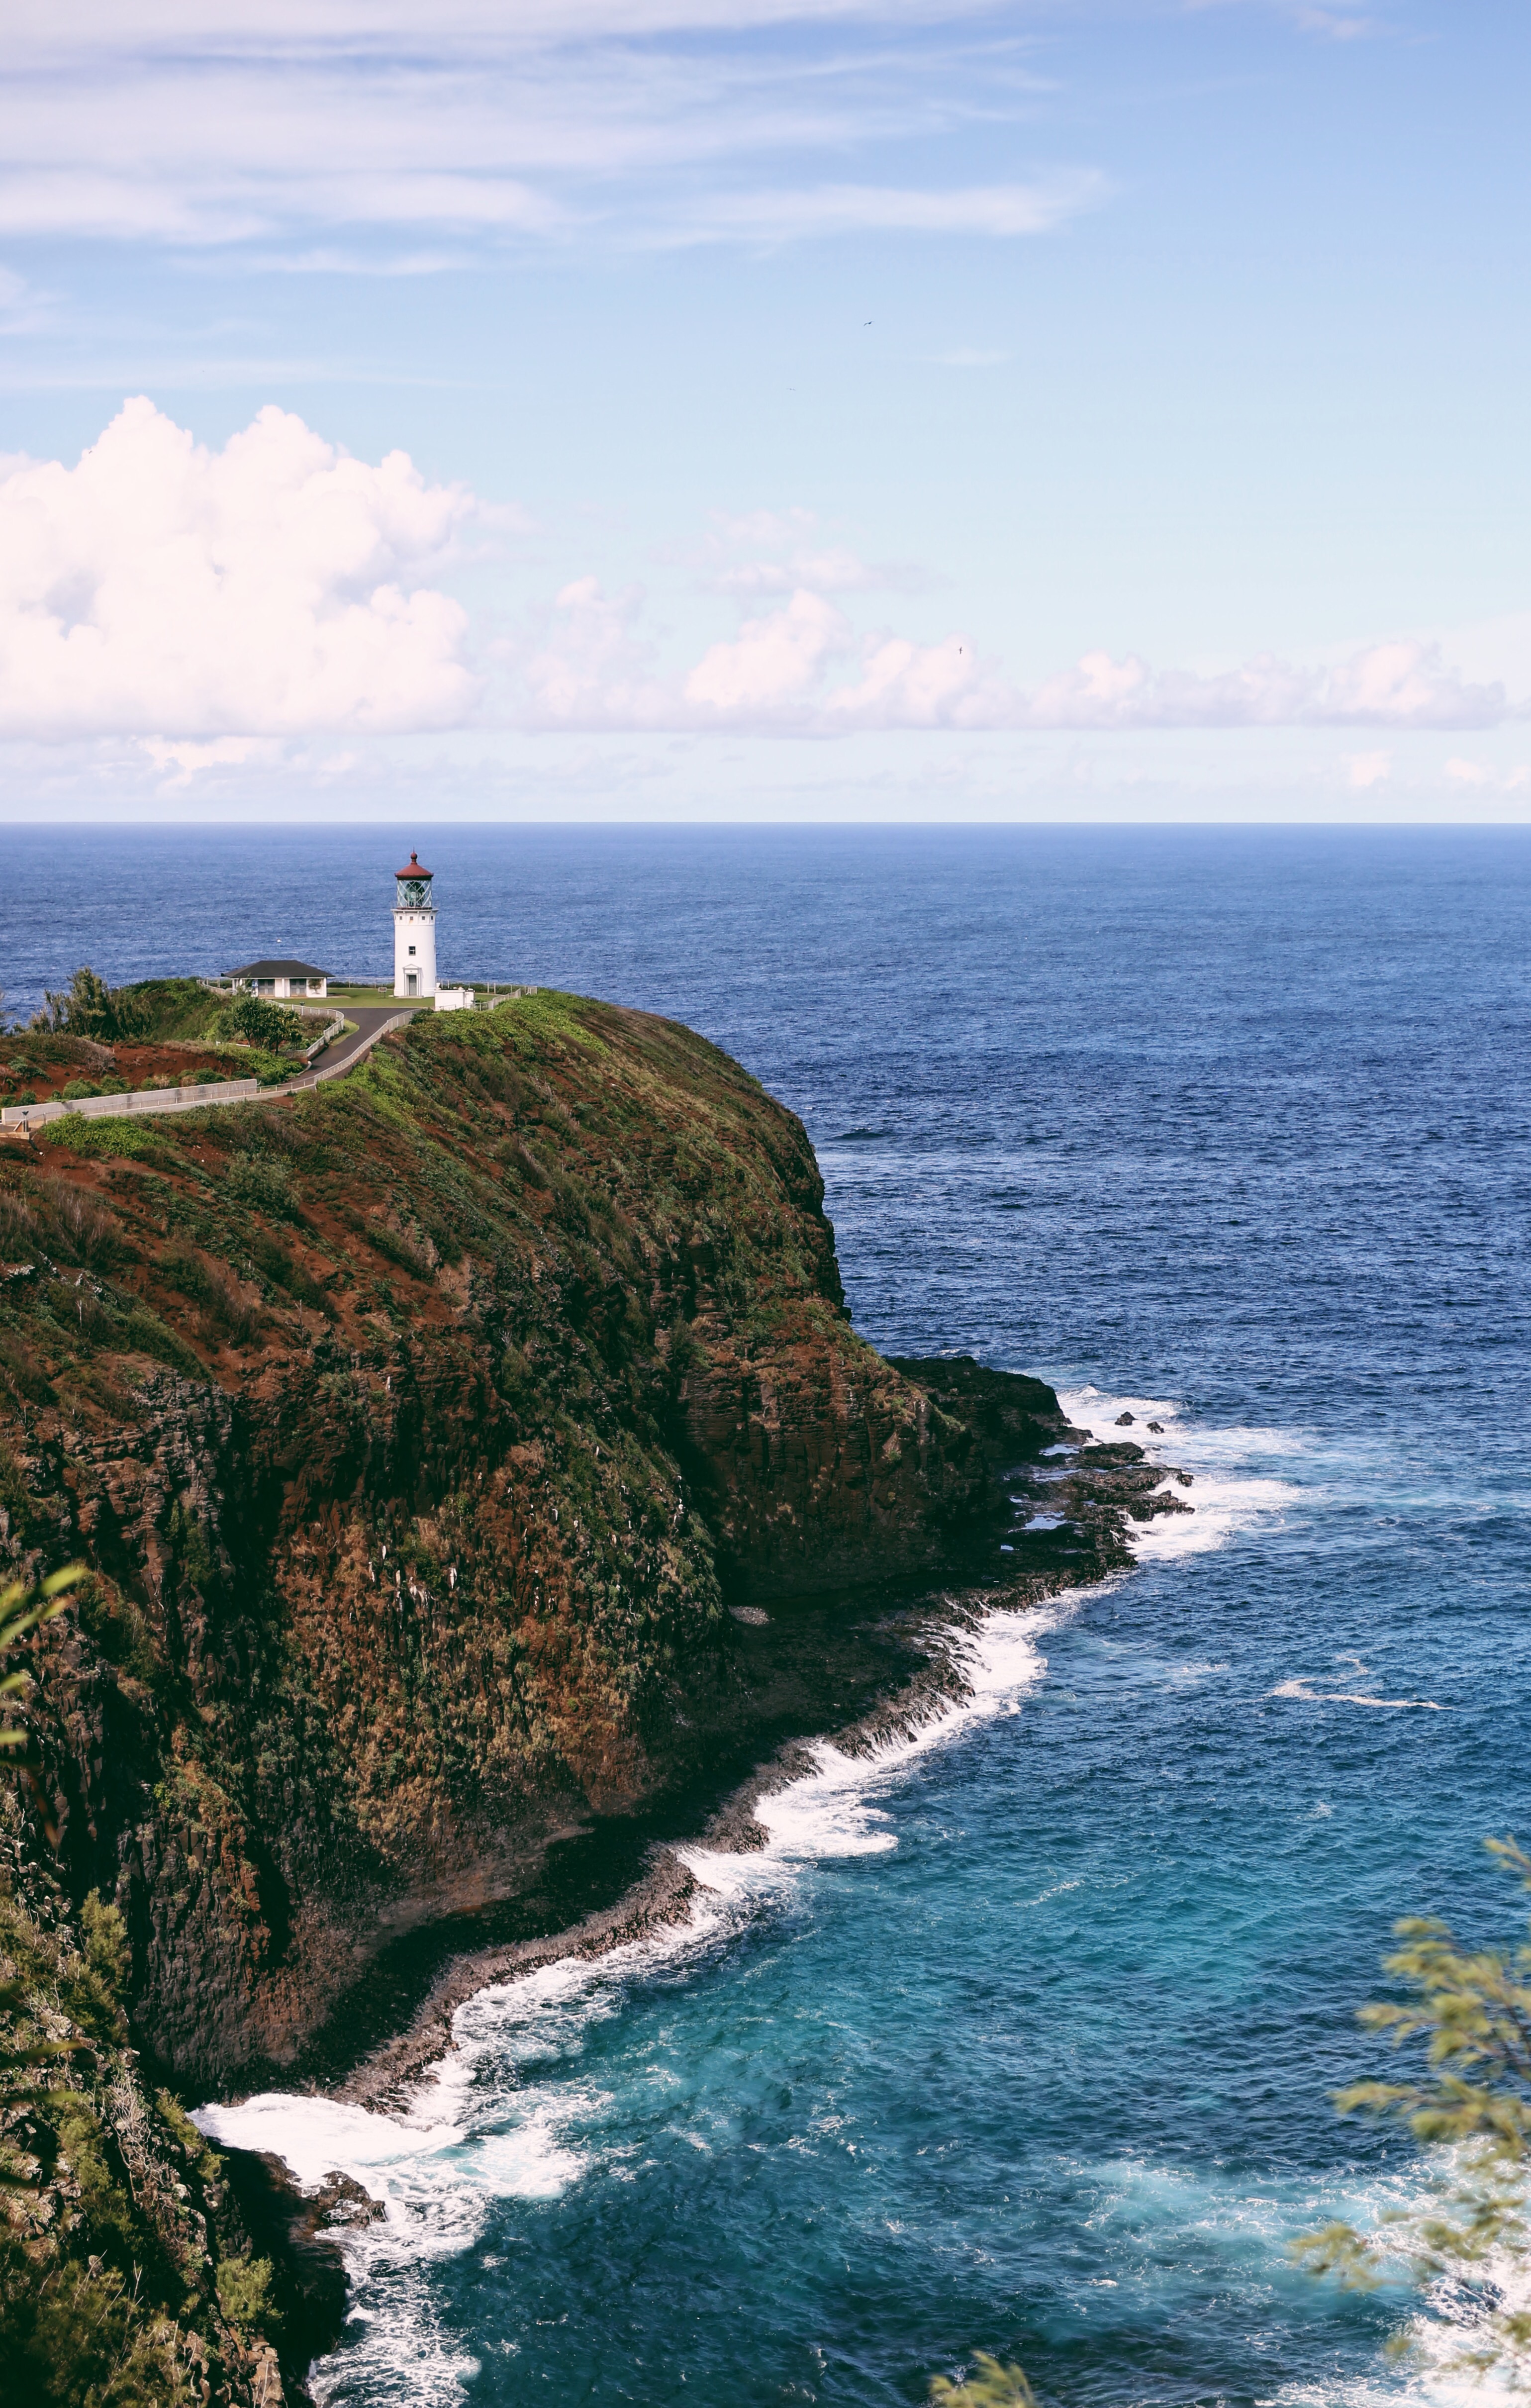 Travel Guide to Kauai, Hawaii | Kilauea Lighthouse | Travel Tips for Kauai | Packing List for Kauai | Helpful Tips for Traveling to Kauai | Kauai Travel Guide | Hawaii Travel Guide | Why You Should Visit Hawaii | Napali Coast Boat Excursion | Activities To Do in Kauai | Best Vacation Places in the World via @elanaloo + elanaloo.com